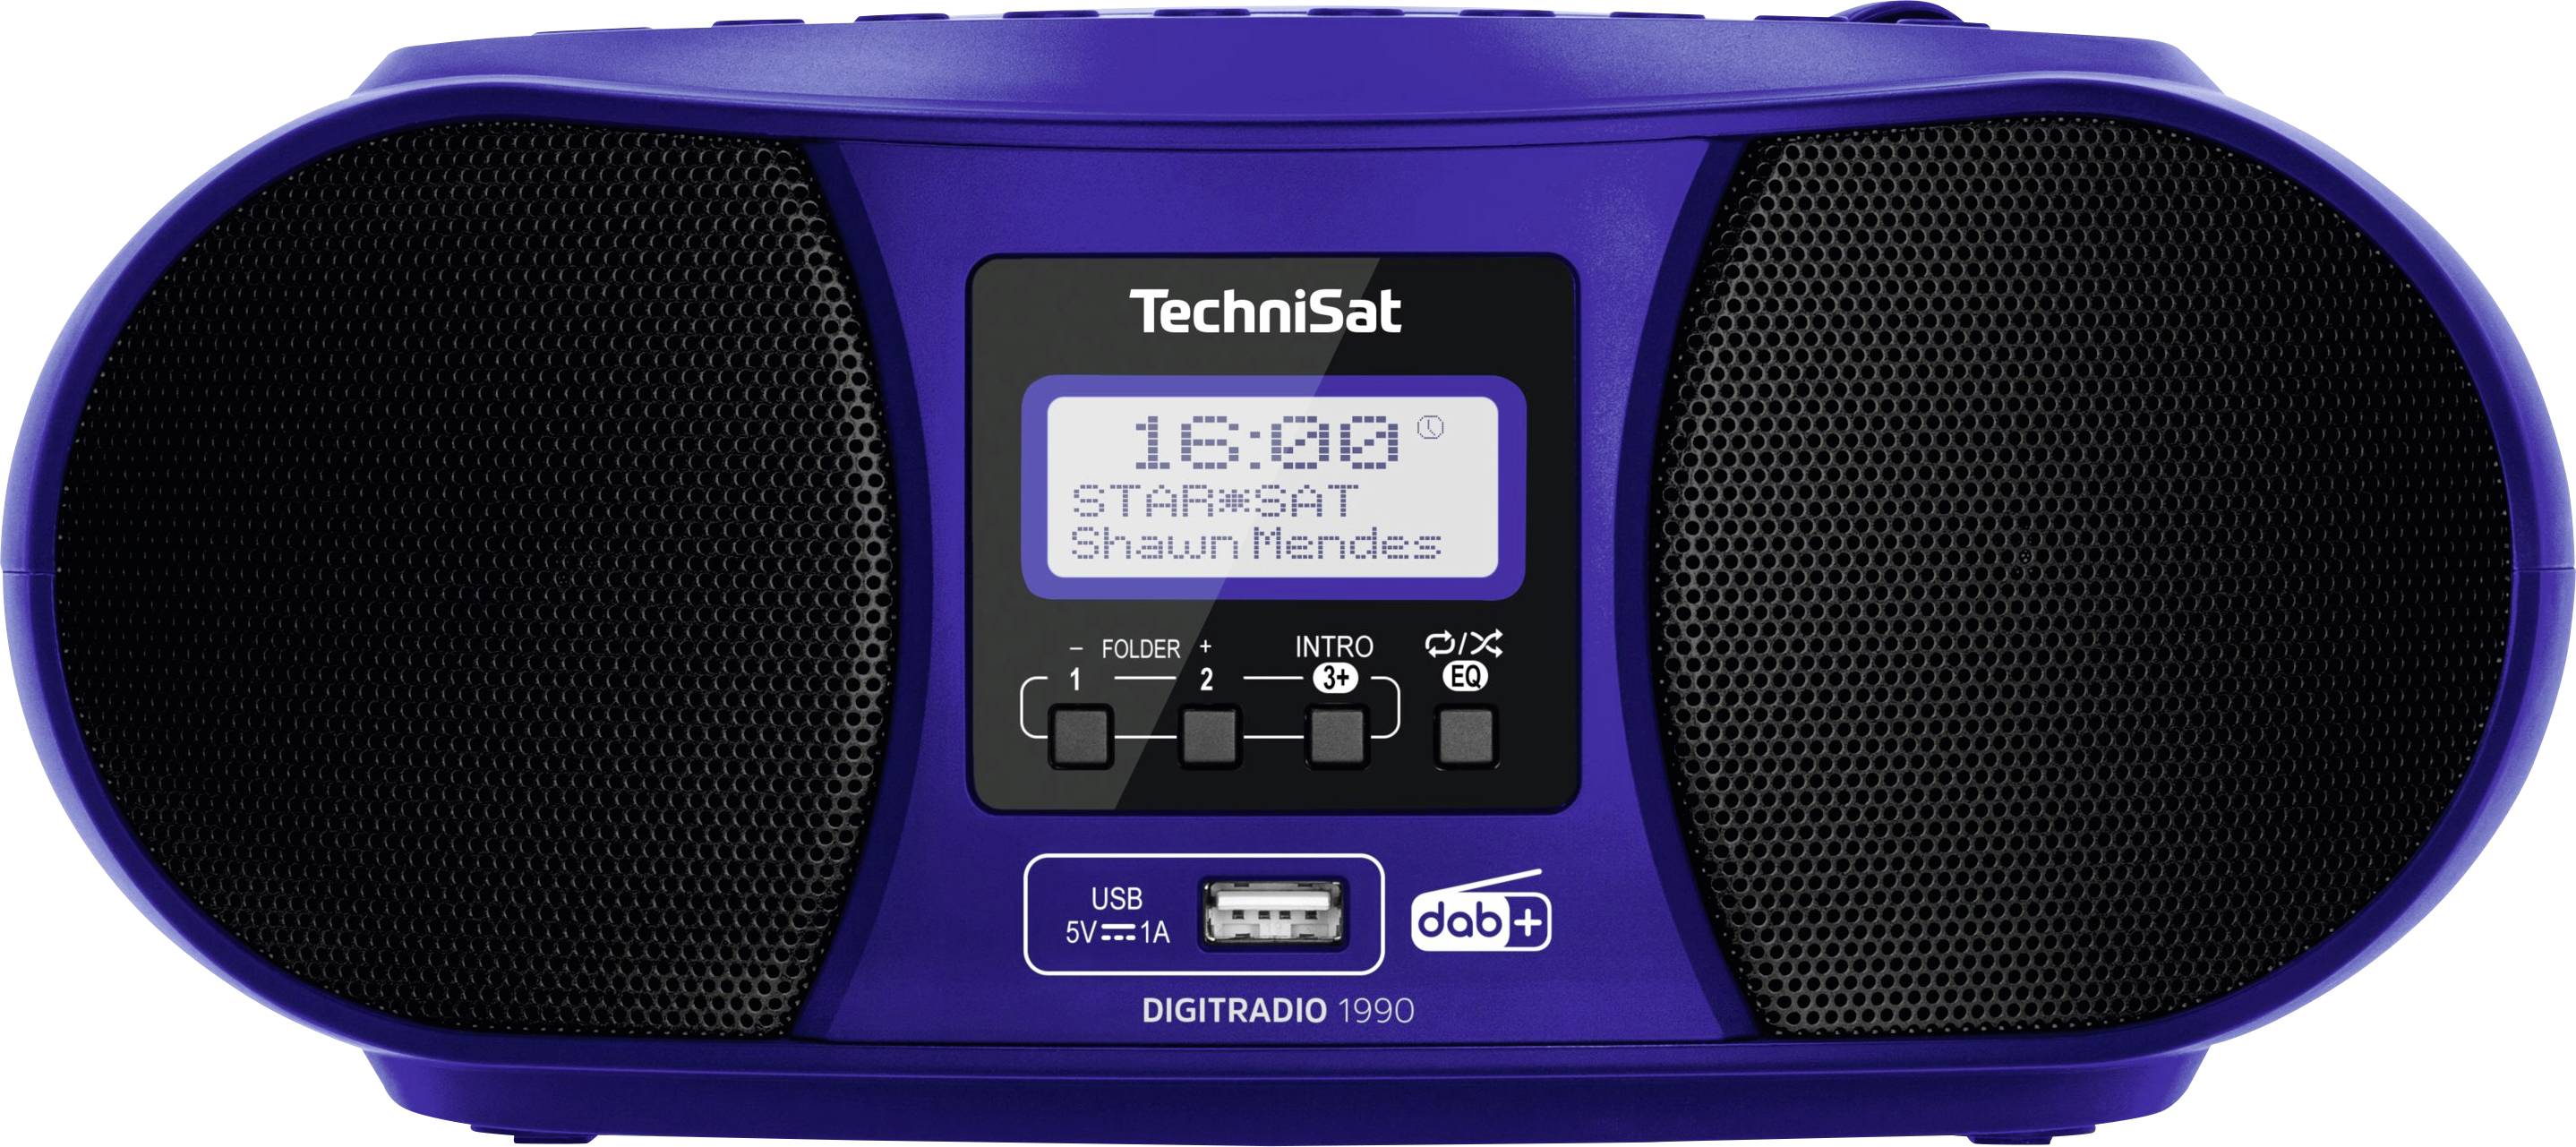 clock Conrad Bluetooth, CD, Battery DAB+, Alarm AUX, 1990 Buy Electronic player DIGITRADIO TechniSat charger, Blue CD USB Radio FM |